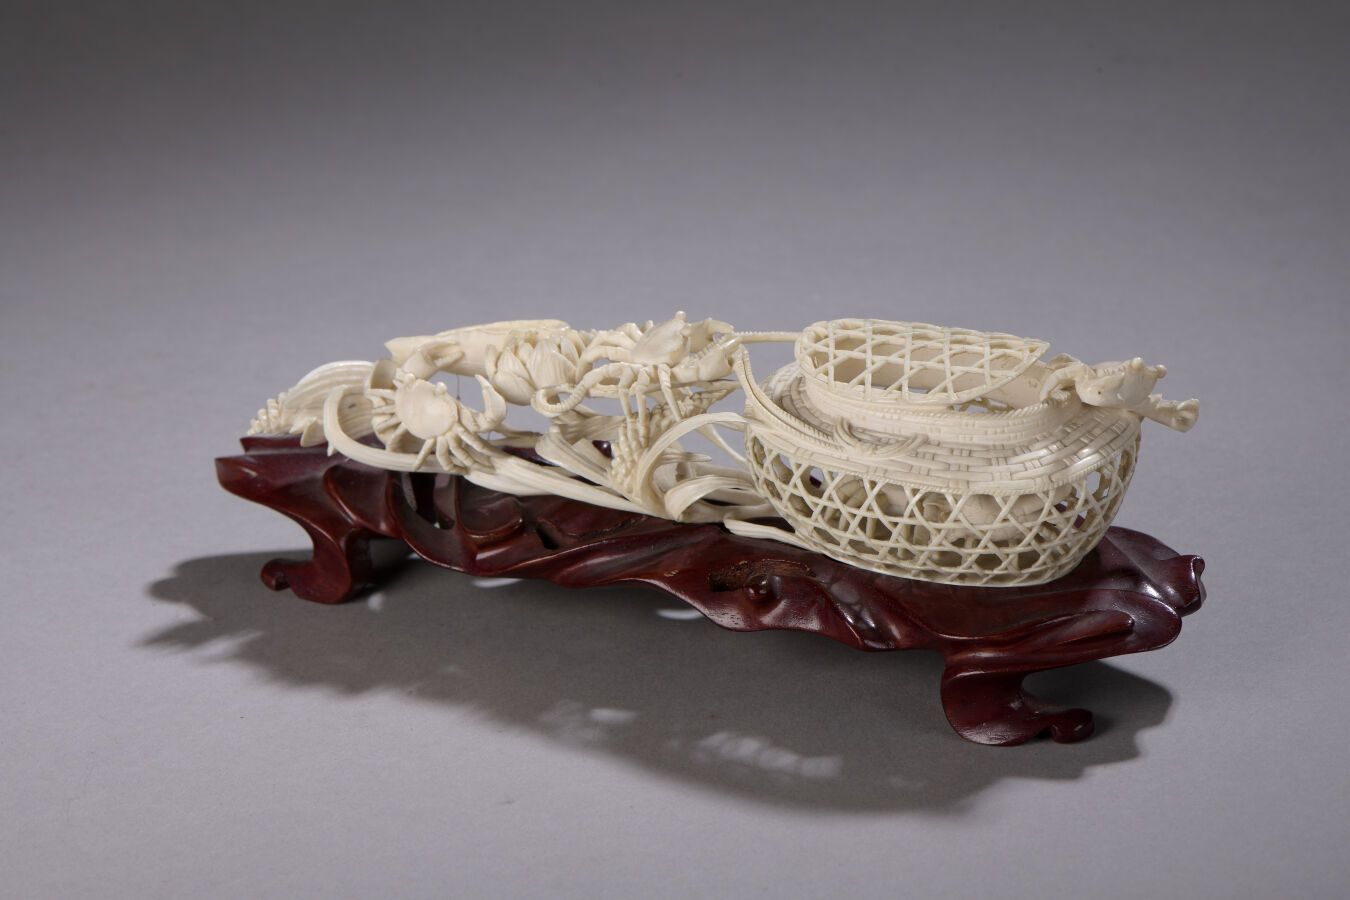 Null 雕刻的象牙和服上有一篮子的螃蟹和莲花。轻微损坏。雕刻的木质底座。日本，明治后期（1868-1912）。长21.5厘米，净重 xxxx克。